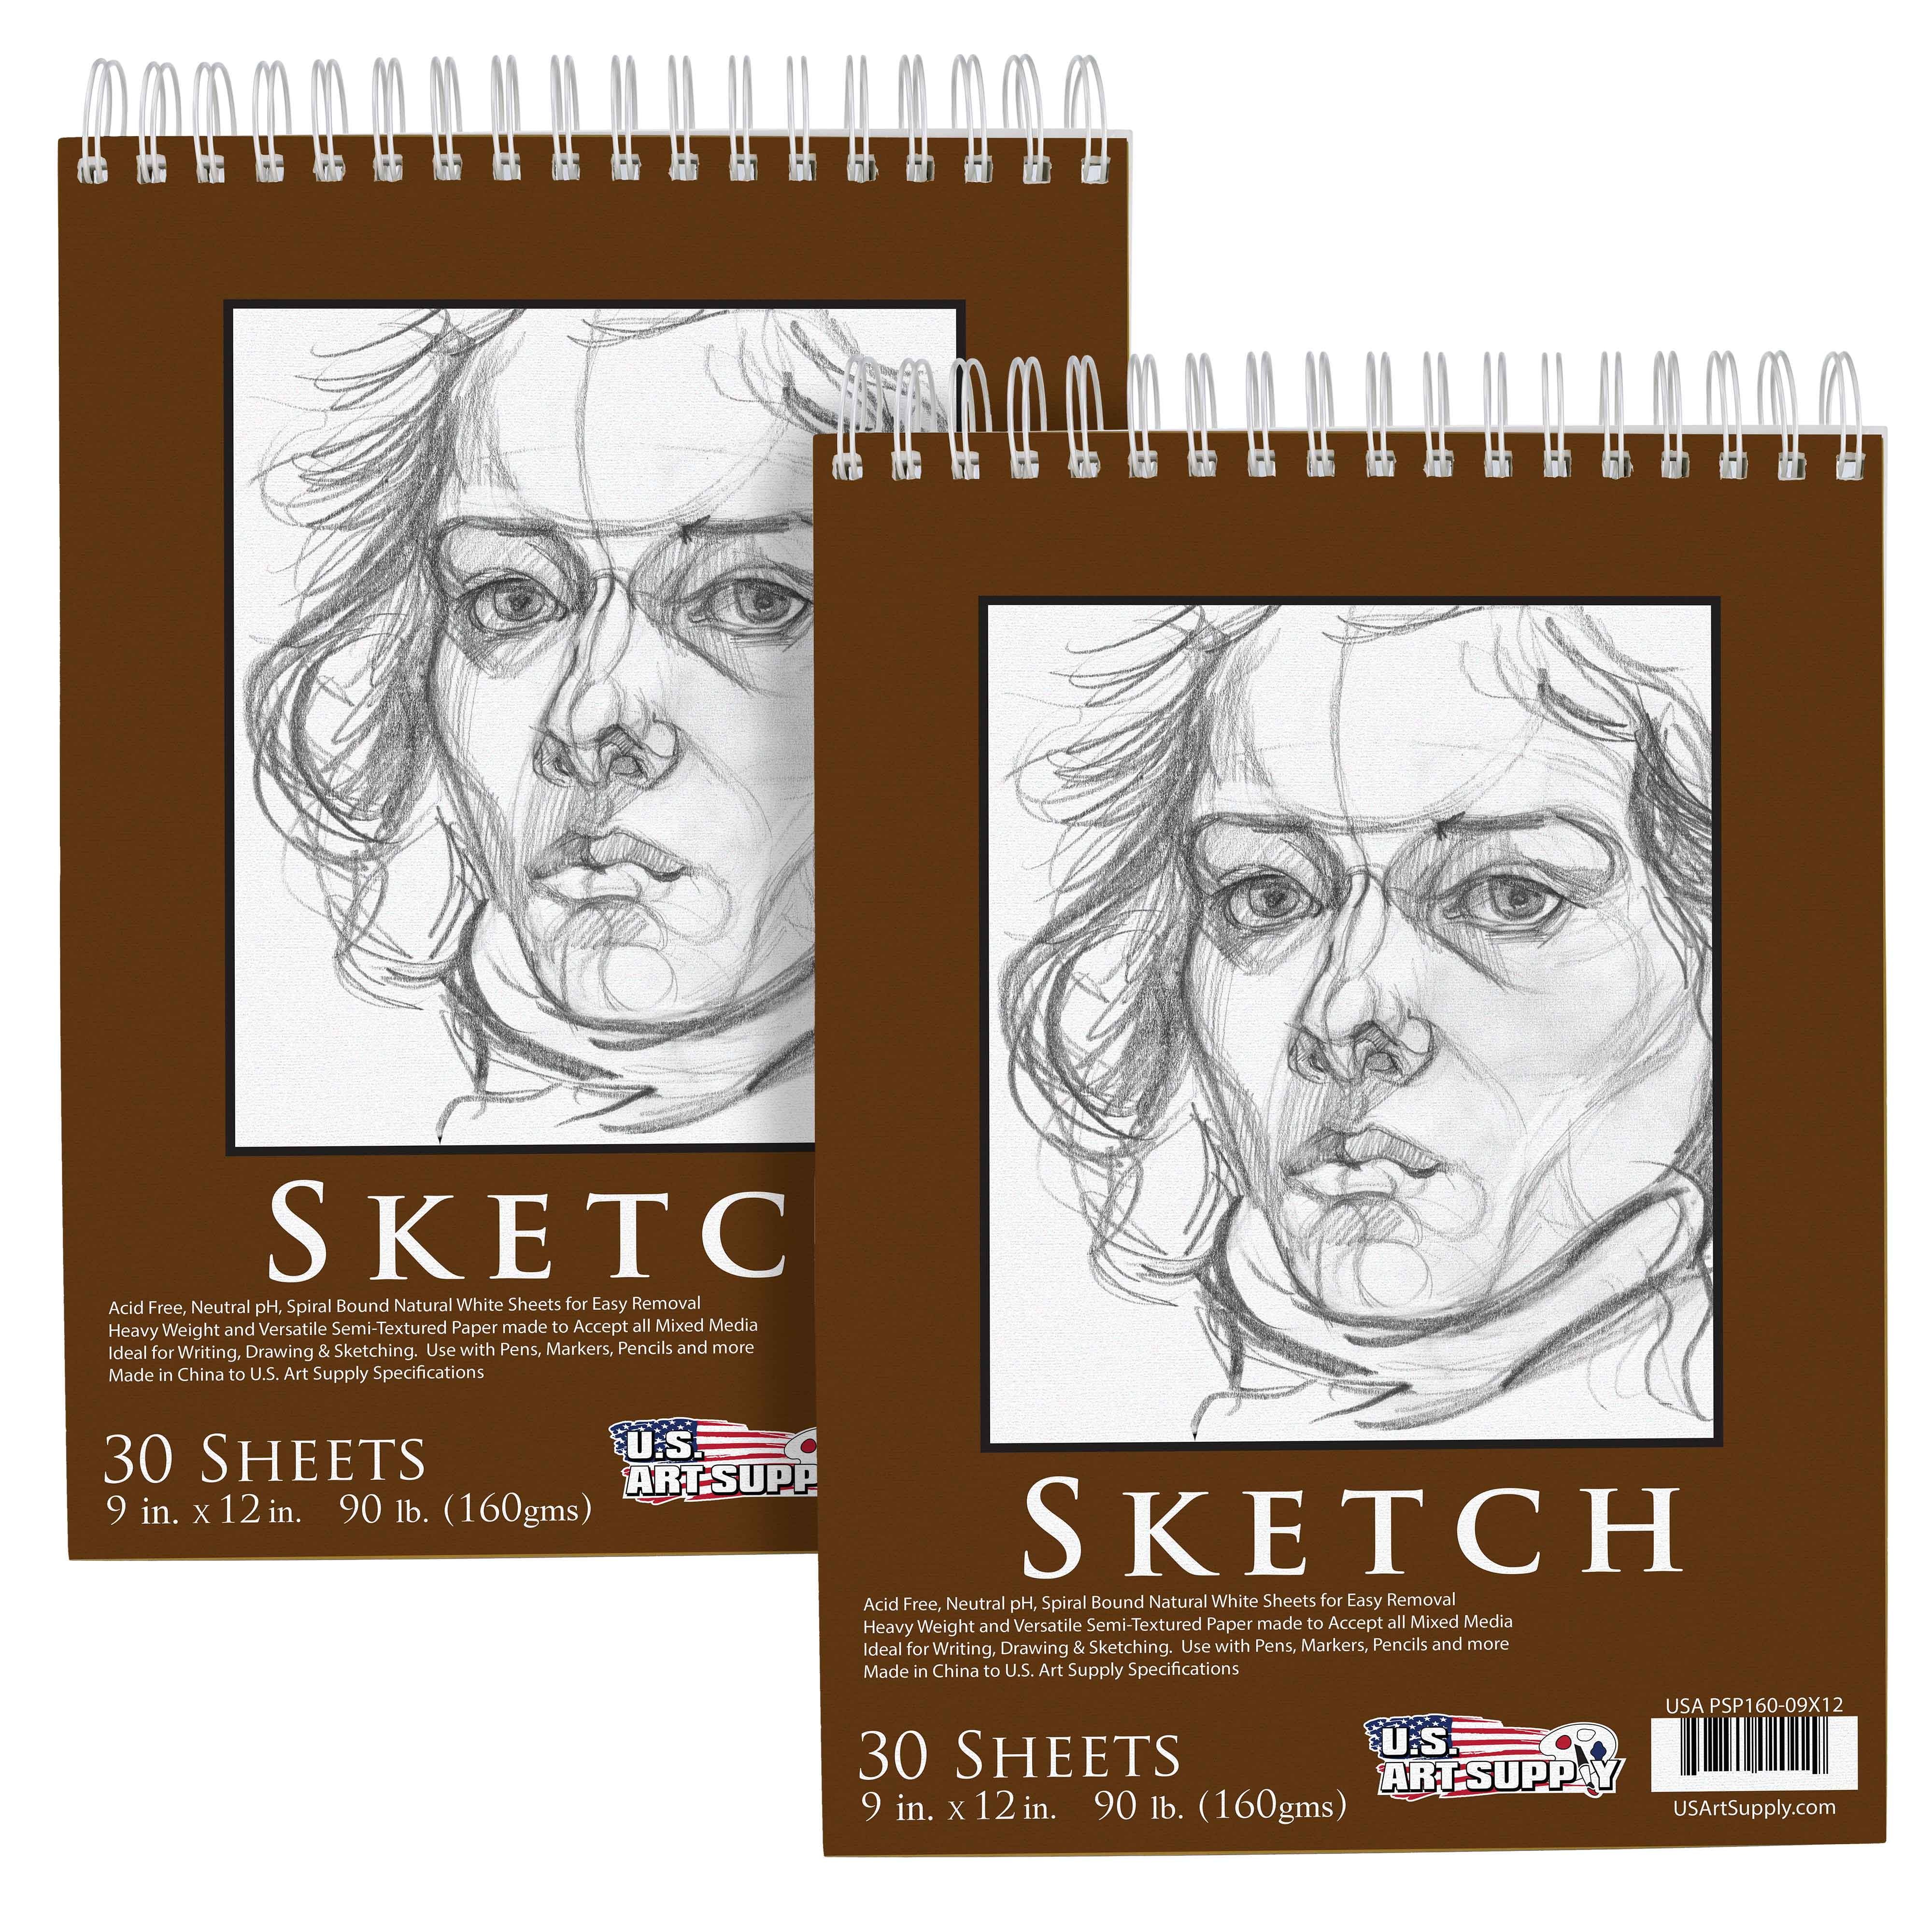 Shuttle Art 9”x12” Sketch Pad, 260 Sheets (68lb/100gsm) Drawing